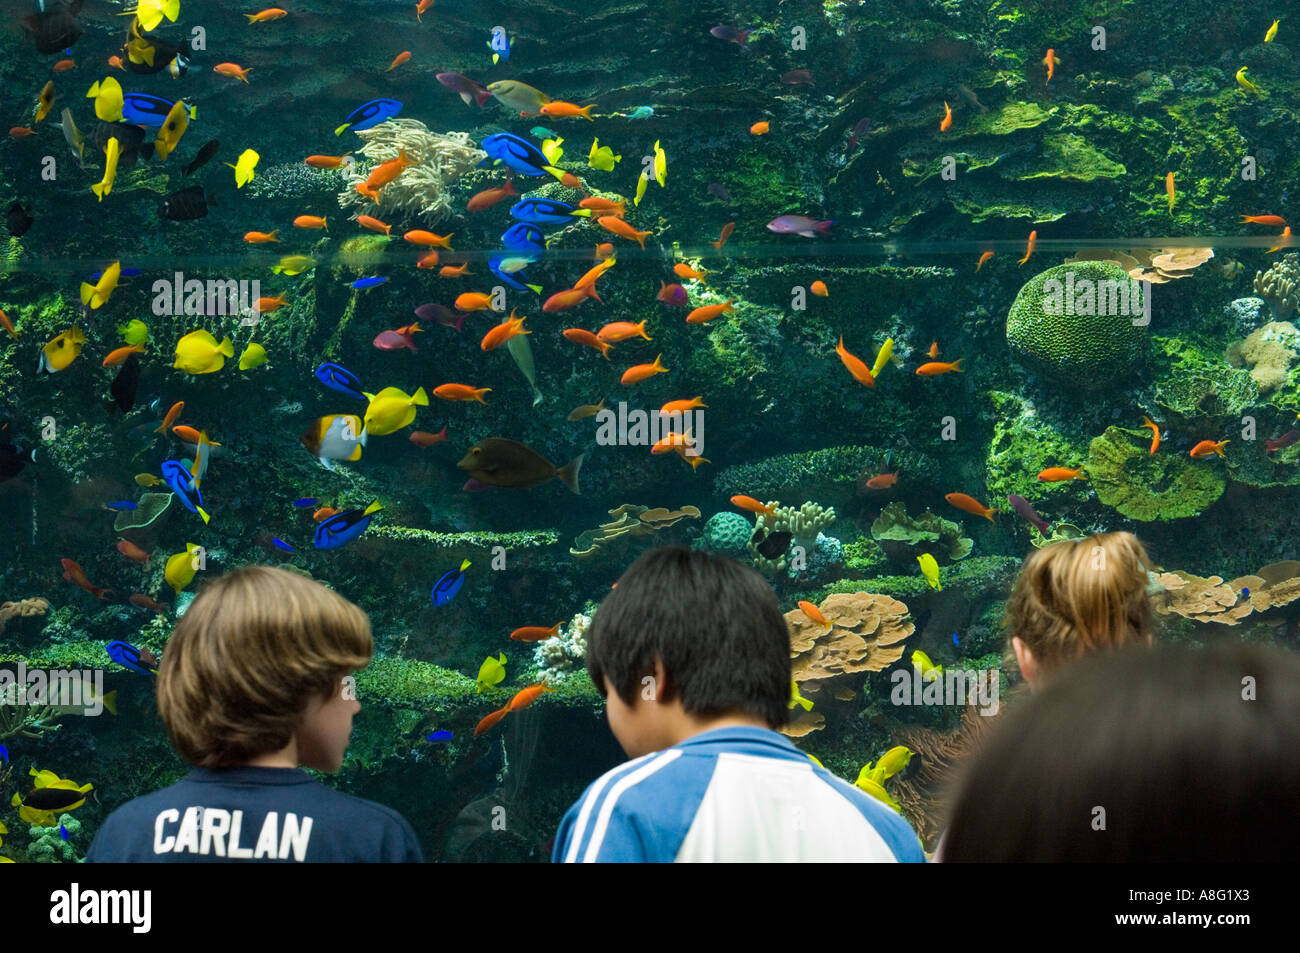 Visitors viewing sea life in the Geogia aquarium in Atlanta, GA Stock Photo